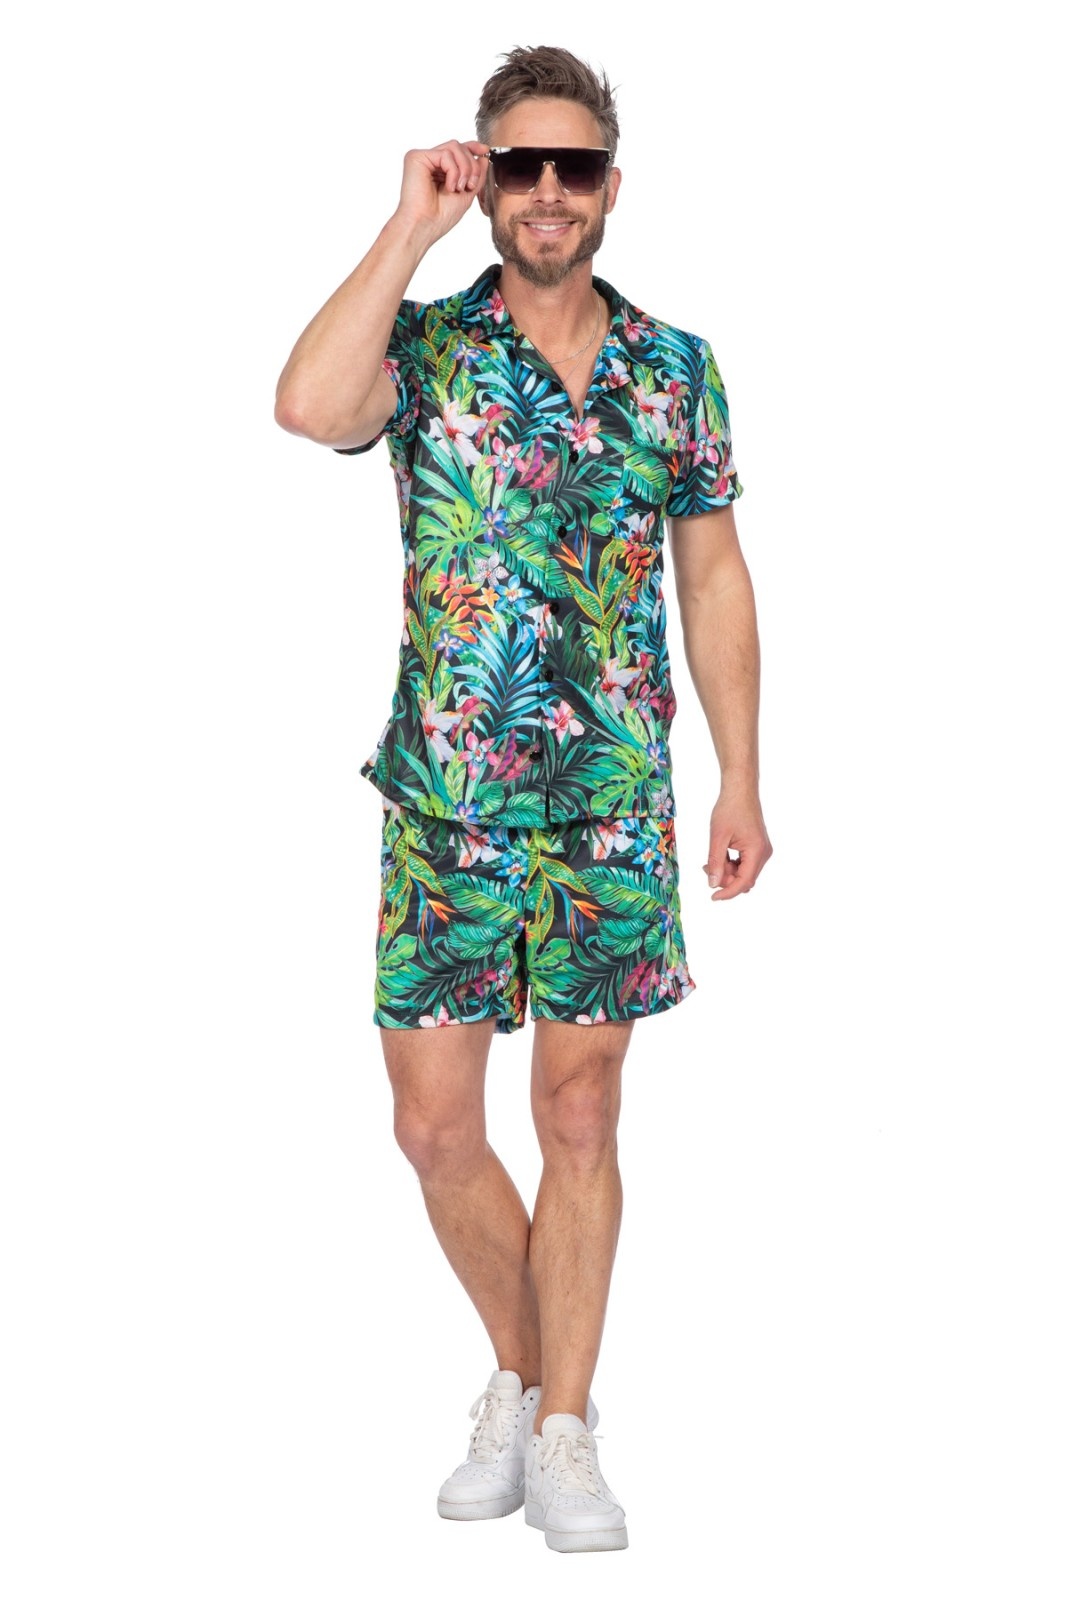 Wilbers - Hawaii & Carribean & Tropisch Kostuum - Hawaii Harrie Op Het Strand - Man - groen,zwart - Medium - Carnavalskleding - Verkleedkleding